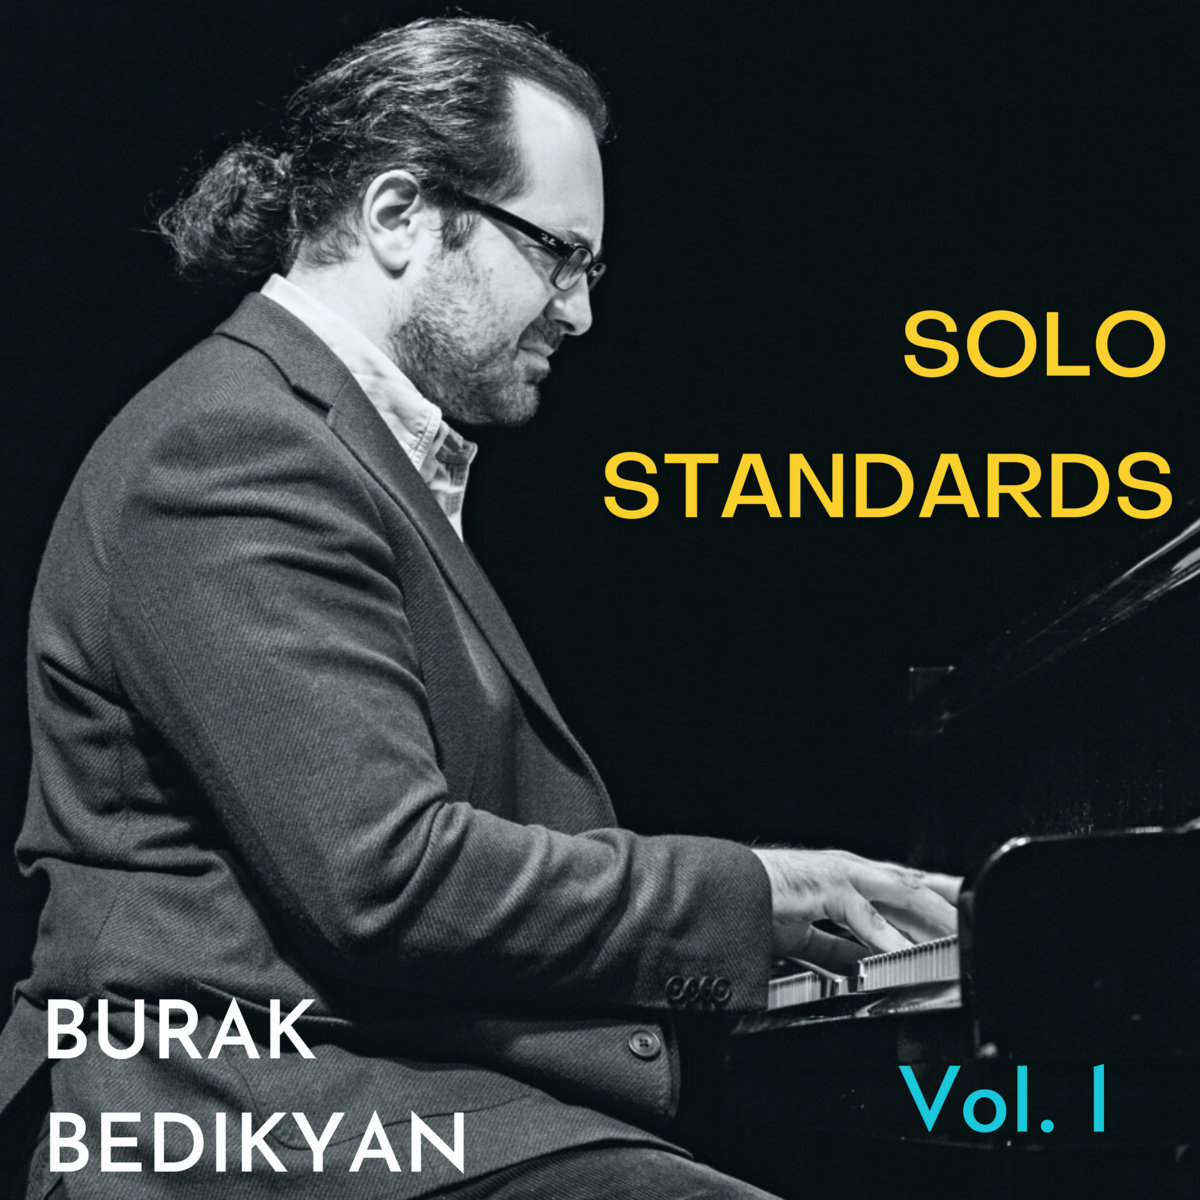 Burak Bedikyan Solo Standards, Vol. I